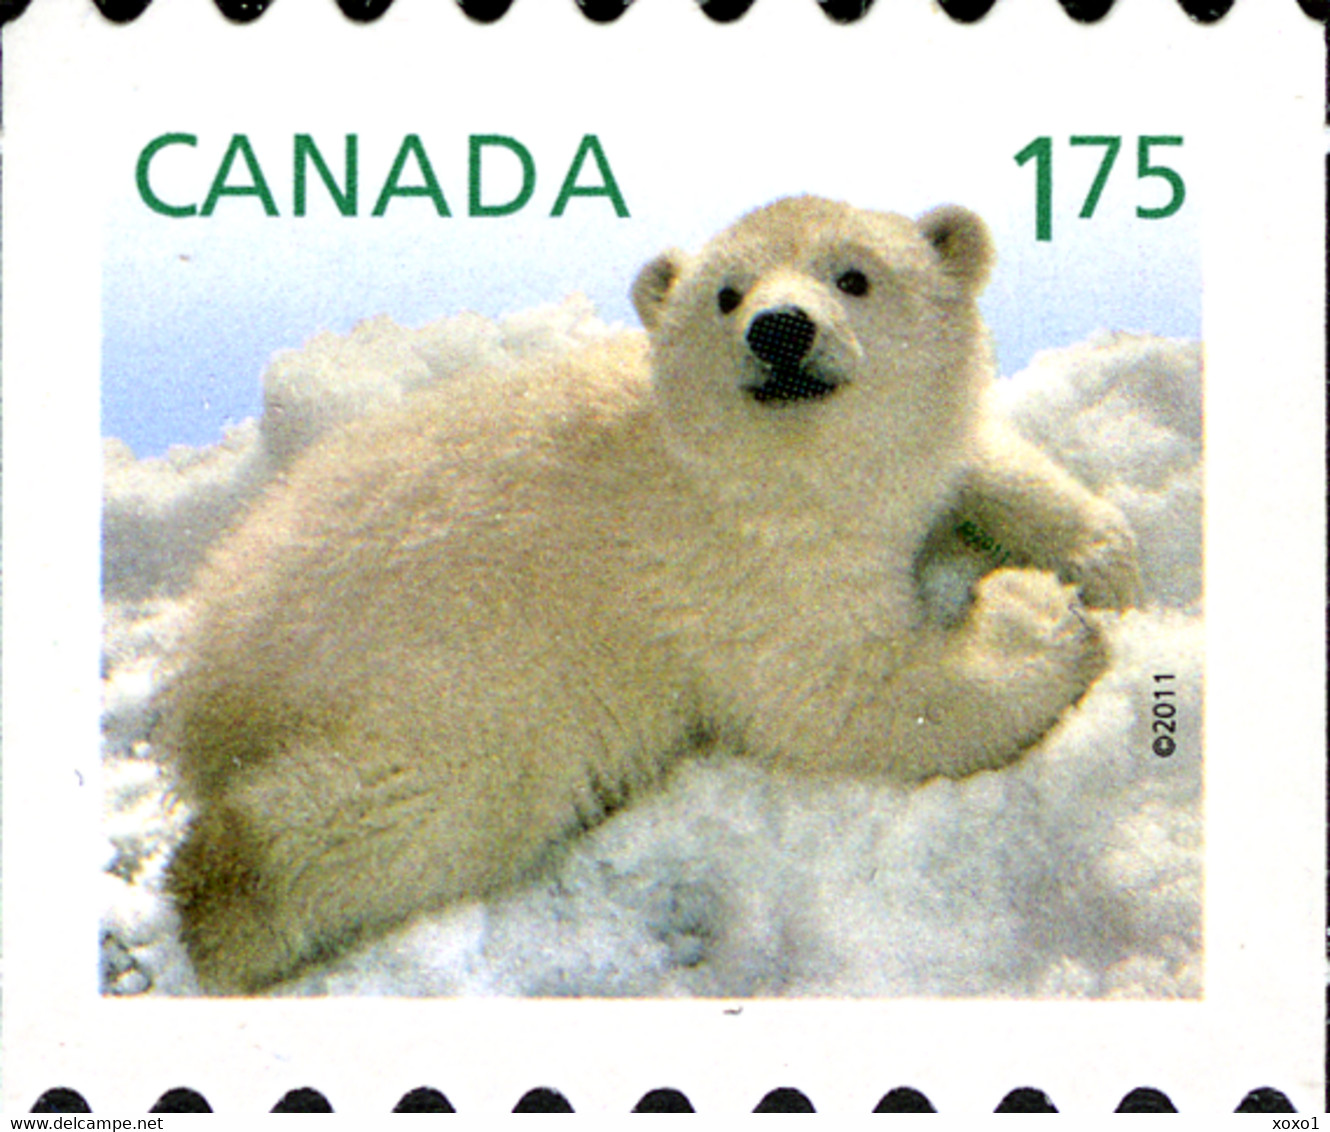 Canada 2011 MiNr. 2682 - 2685  Kanada Baby Wildlife Animals Birds - I 4v MNH** 9,50 € - Ours